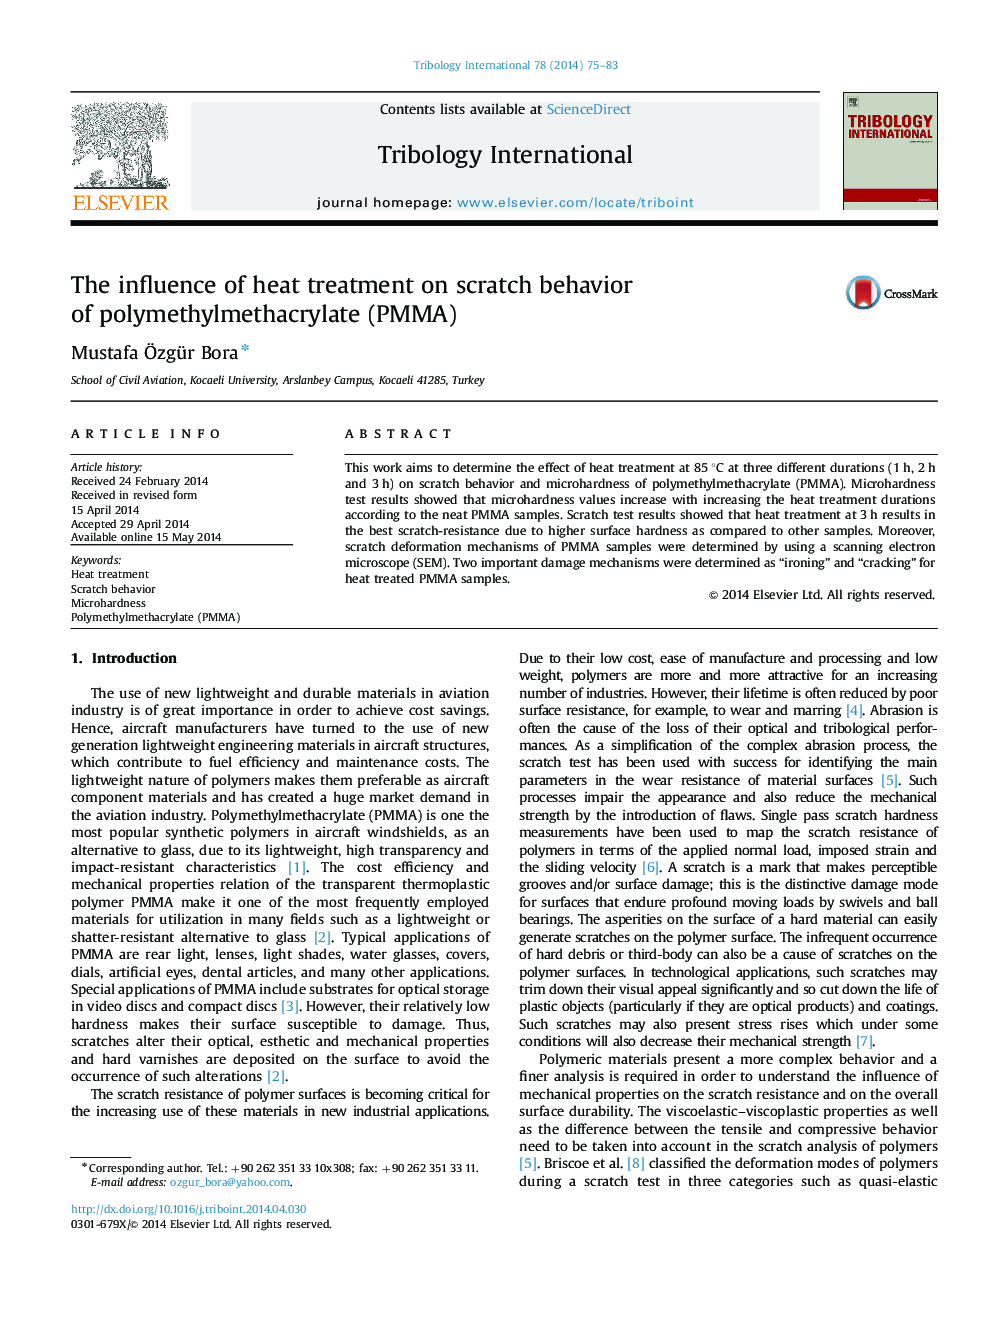 The influence of heat treatment on scratch behavior of polymethylmethacrylate (PMMA)